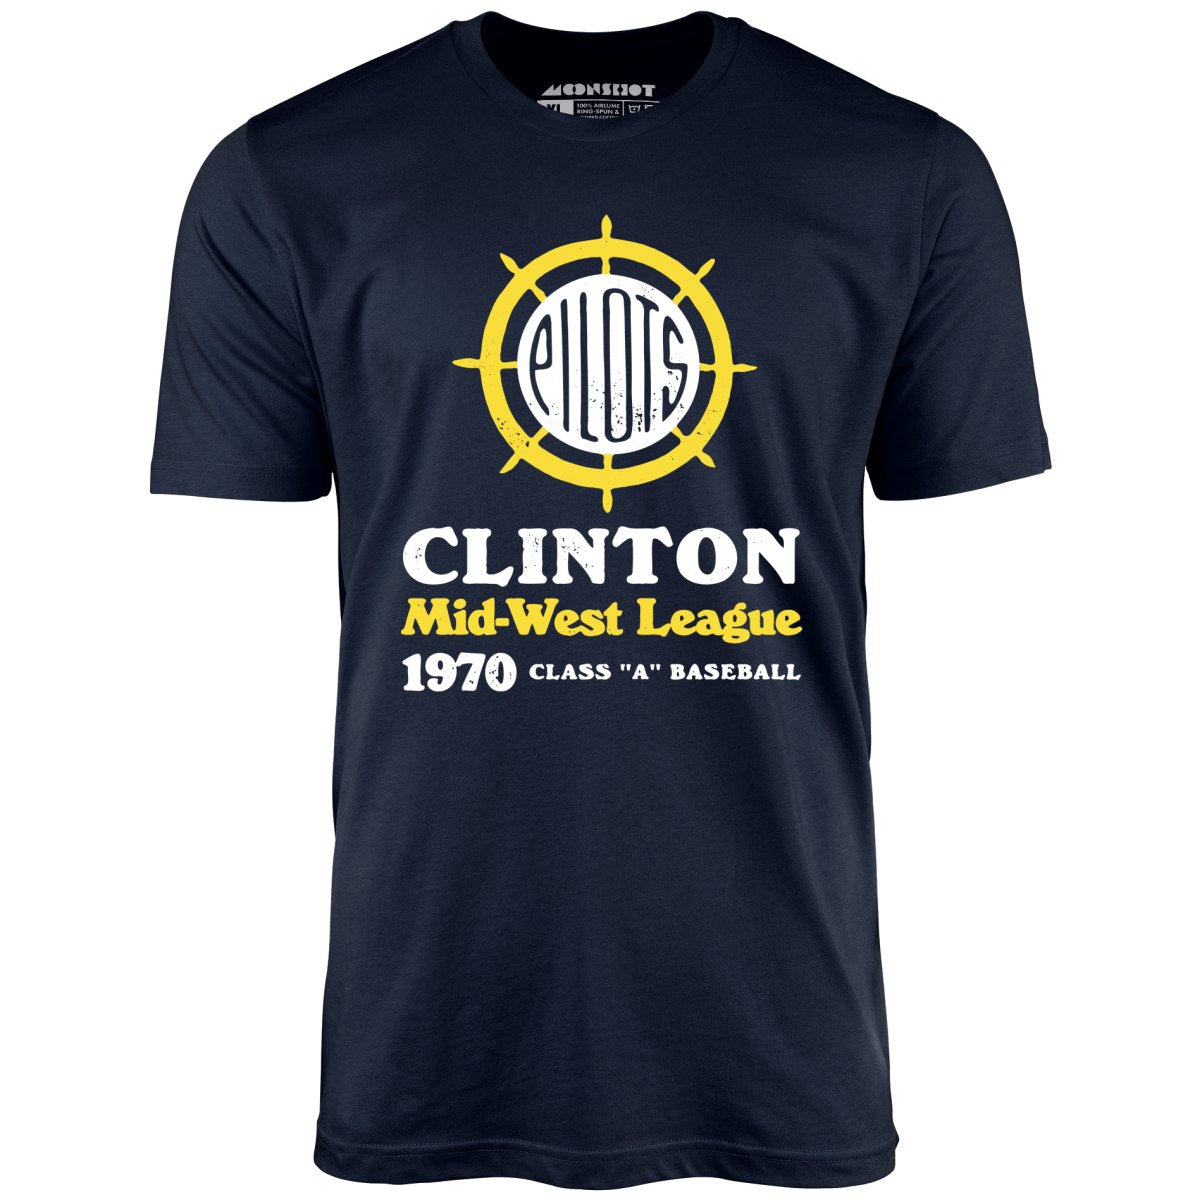 Clinton Pilots - Iowa - Vintage Defunct Baseball Teams - Unisex T-Shirt